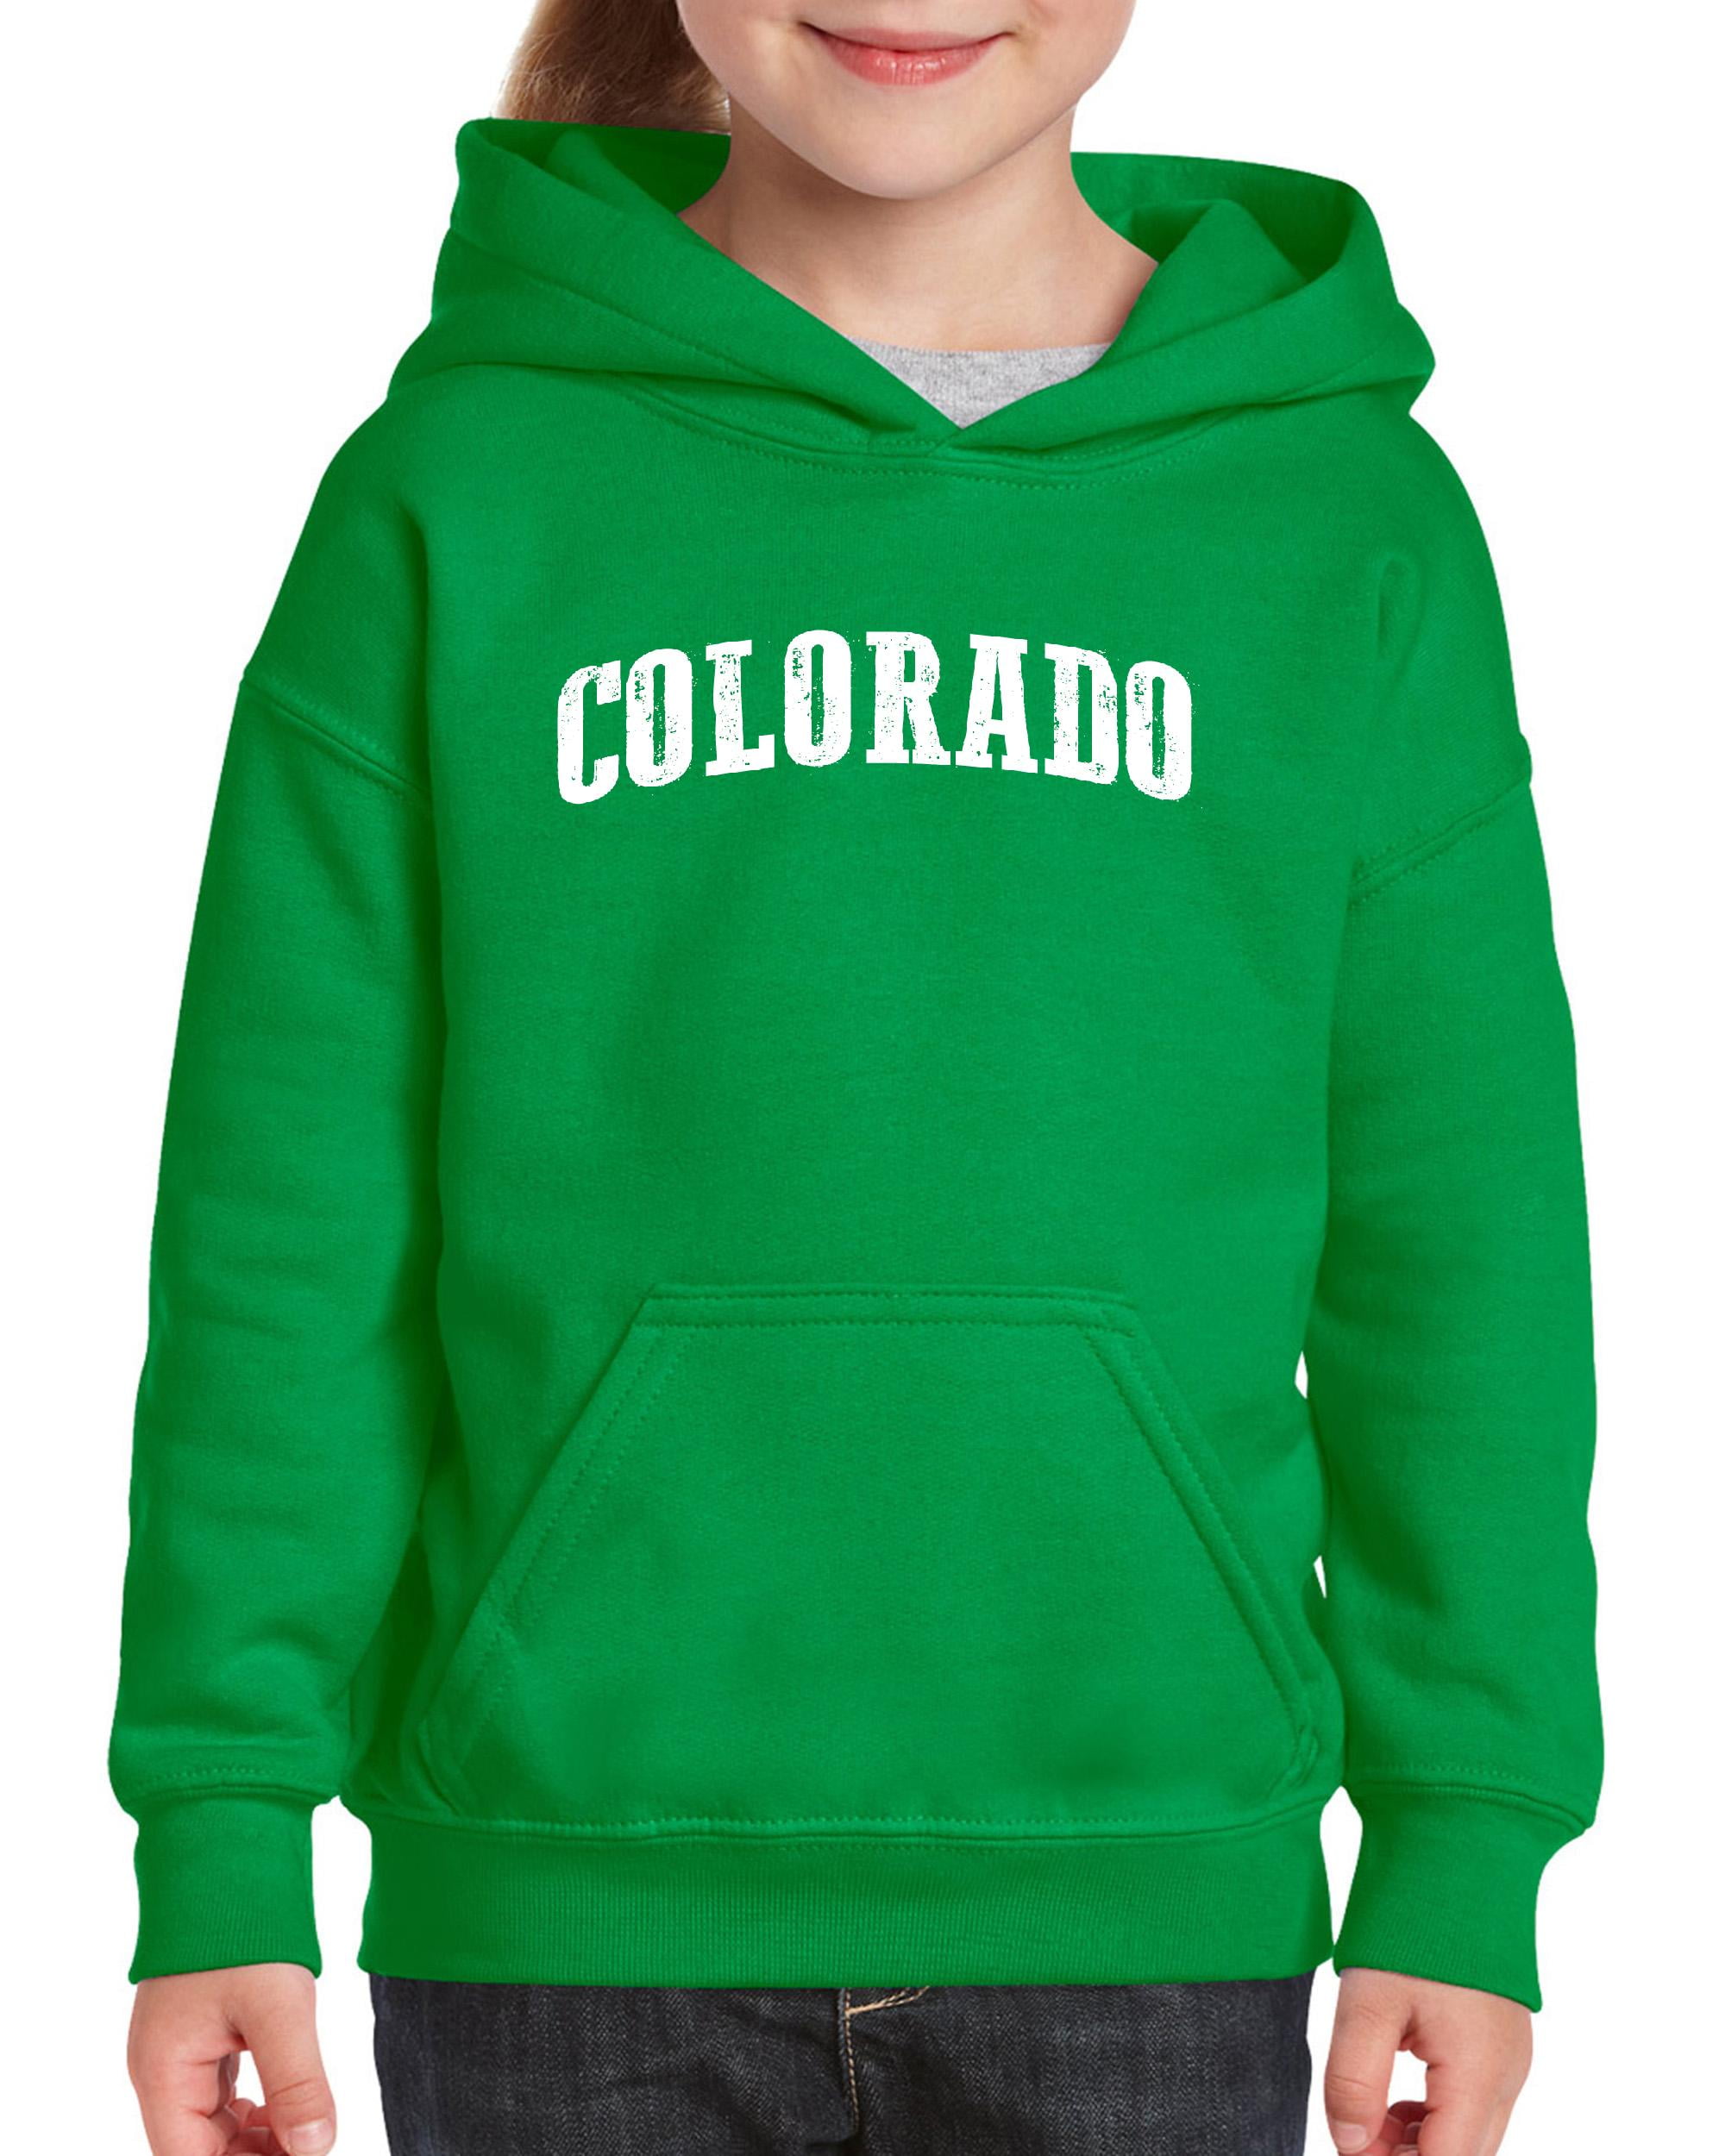 Artix - Big Boys Hoodies and Sweatshirts - Colorado - Walmart.com